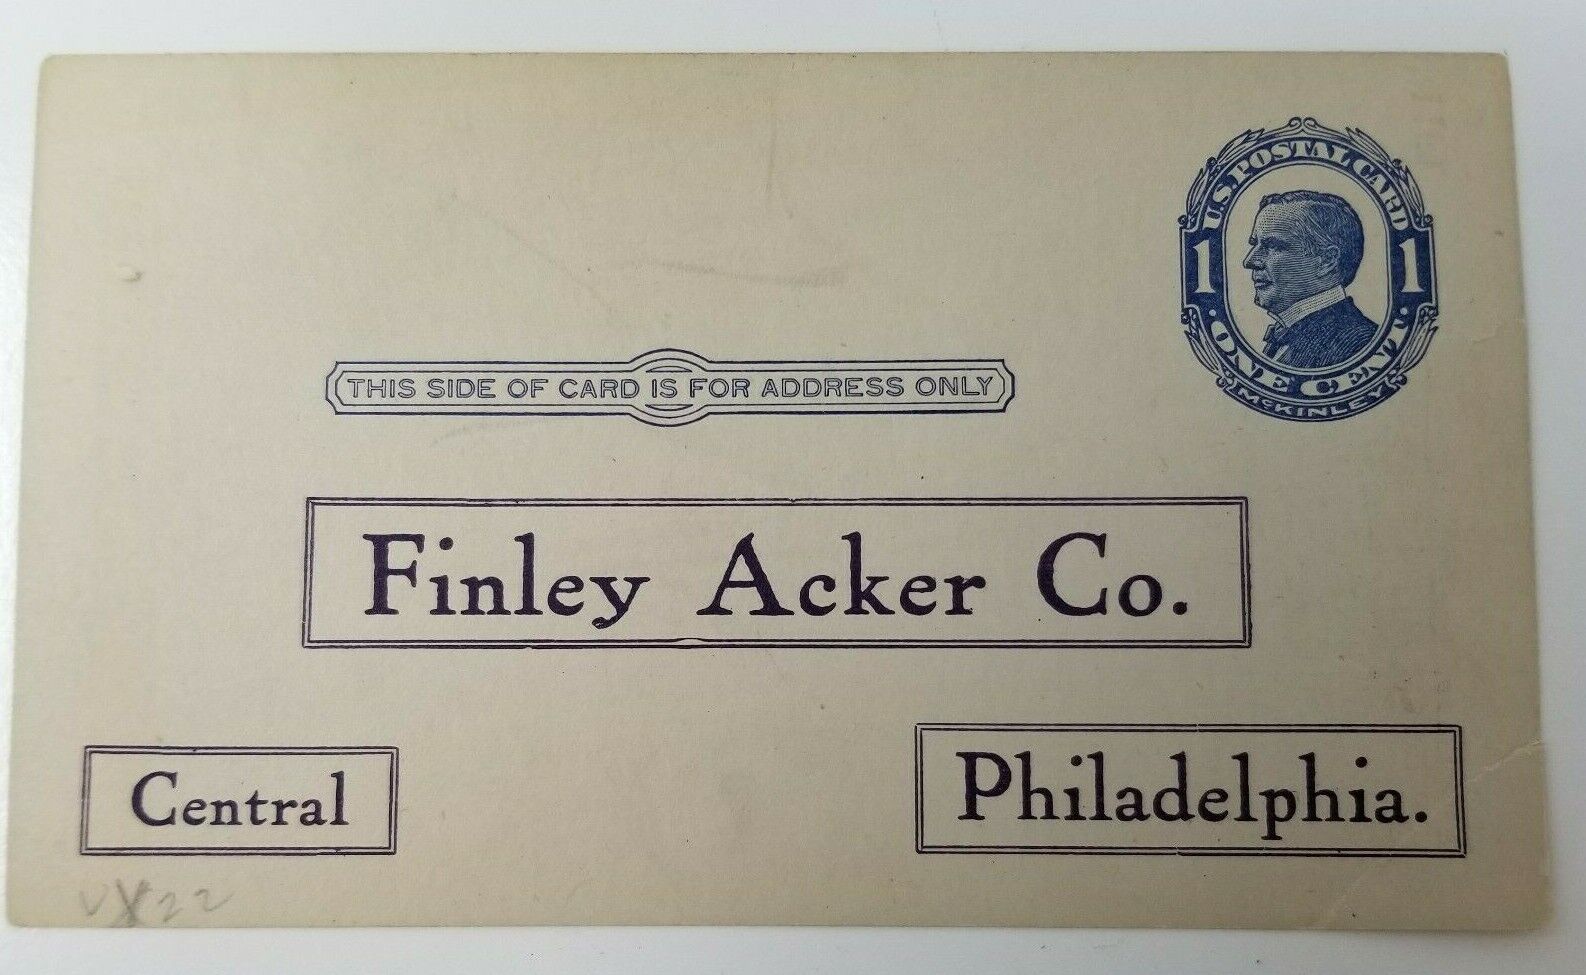 Finley Acker Co. Store Blank Mail Order Card Form Philadelphia 1911